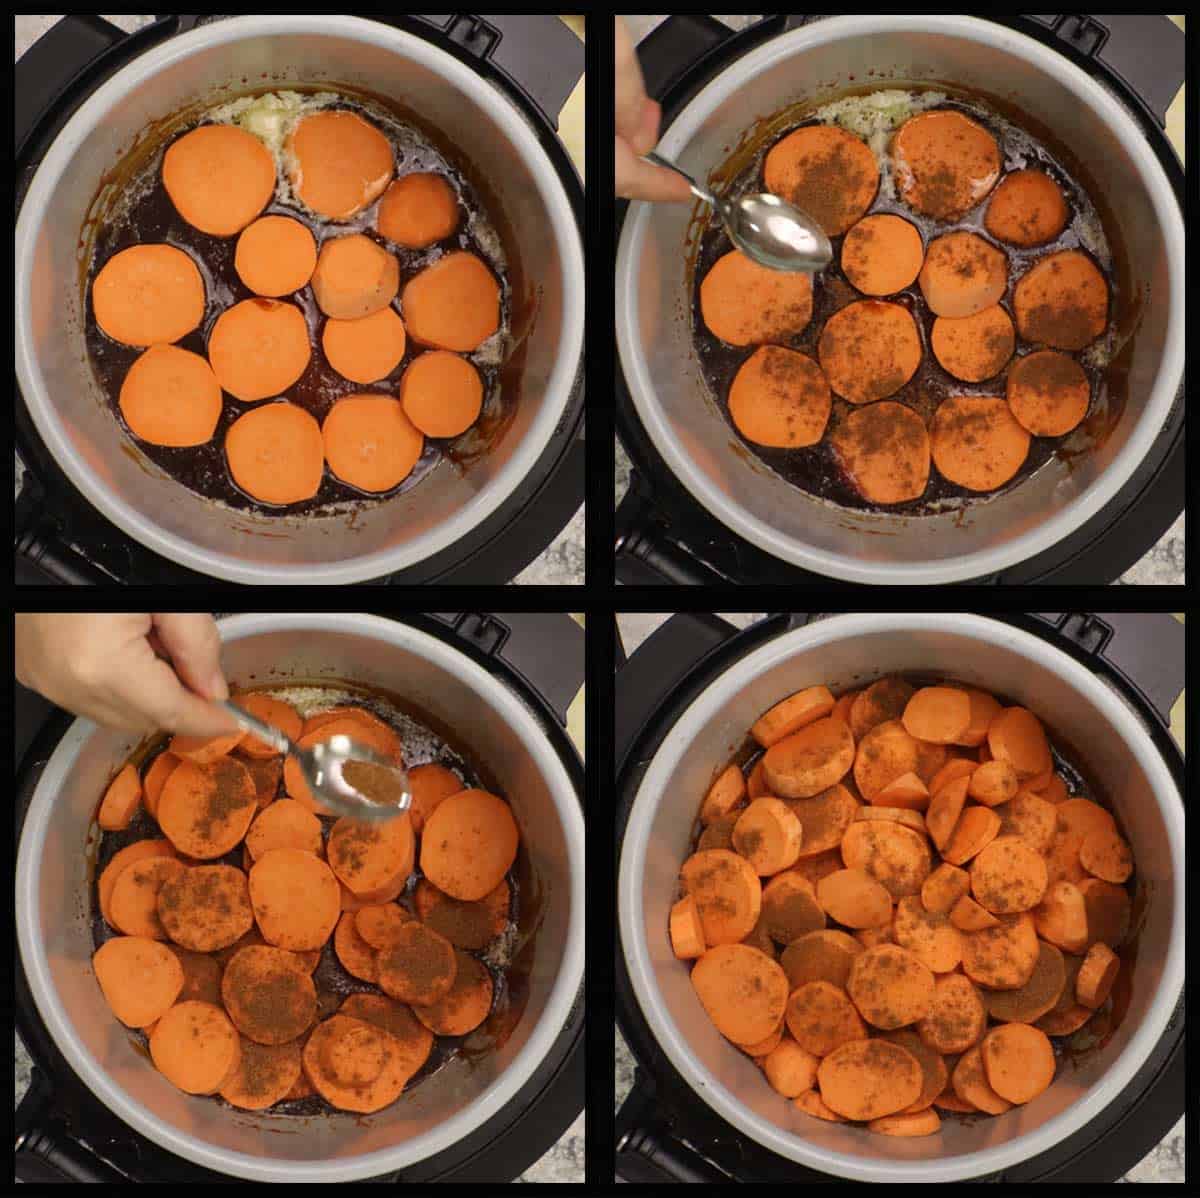 layering sweet potatoes and seasonings in the Ninja Foodi before slow cooking.